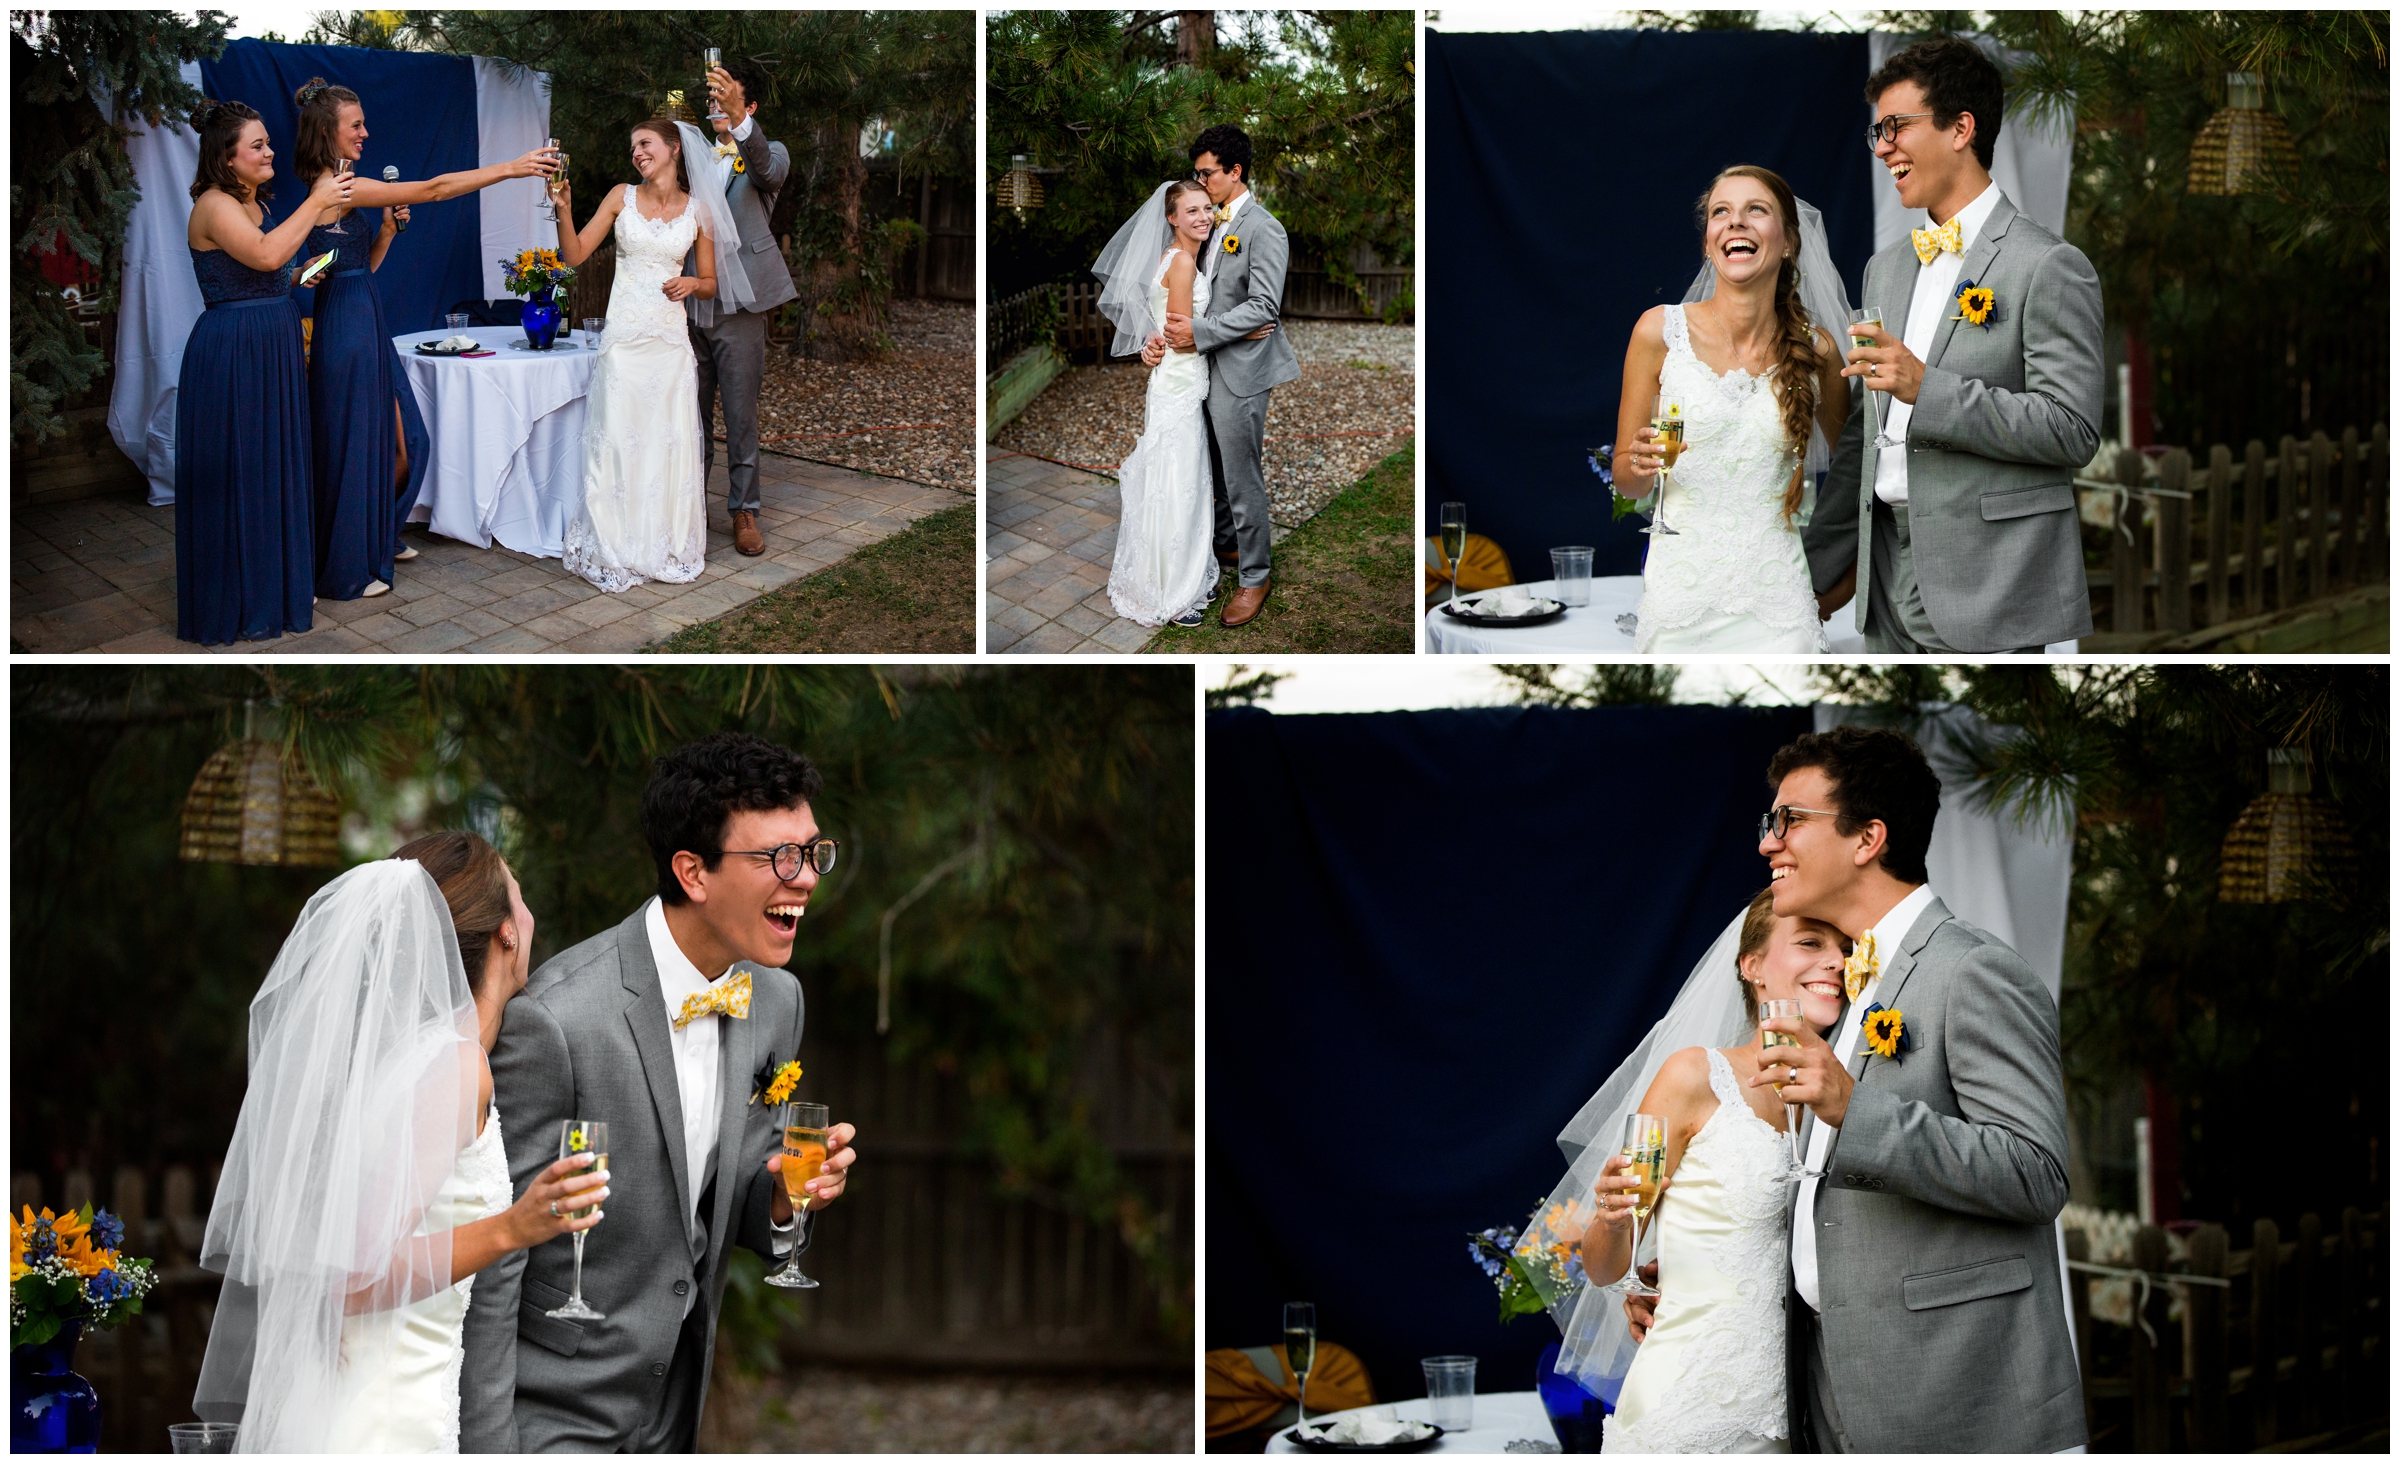 hilarious wedding toasts at Colorado backyard reception 